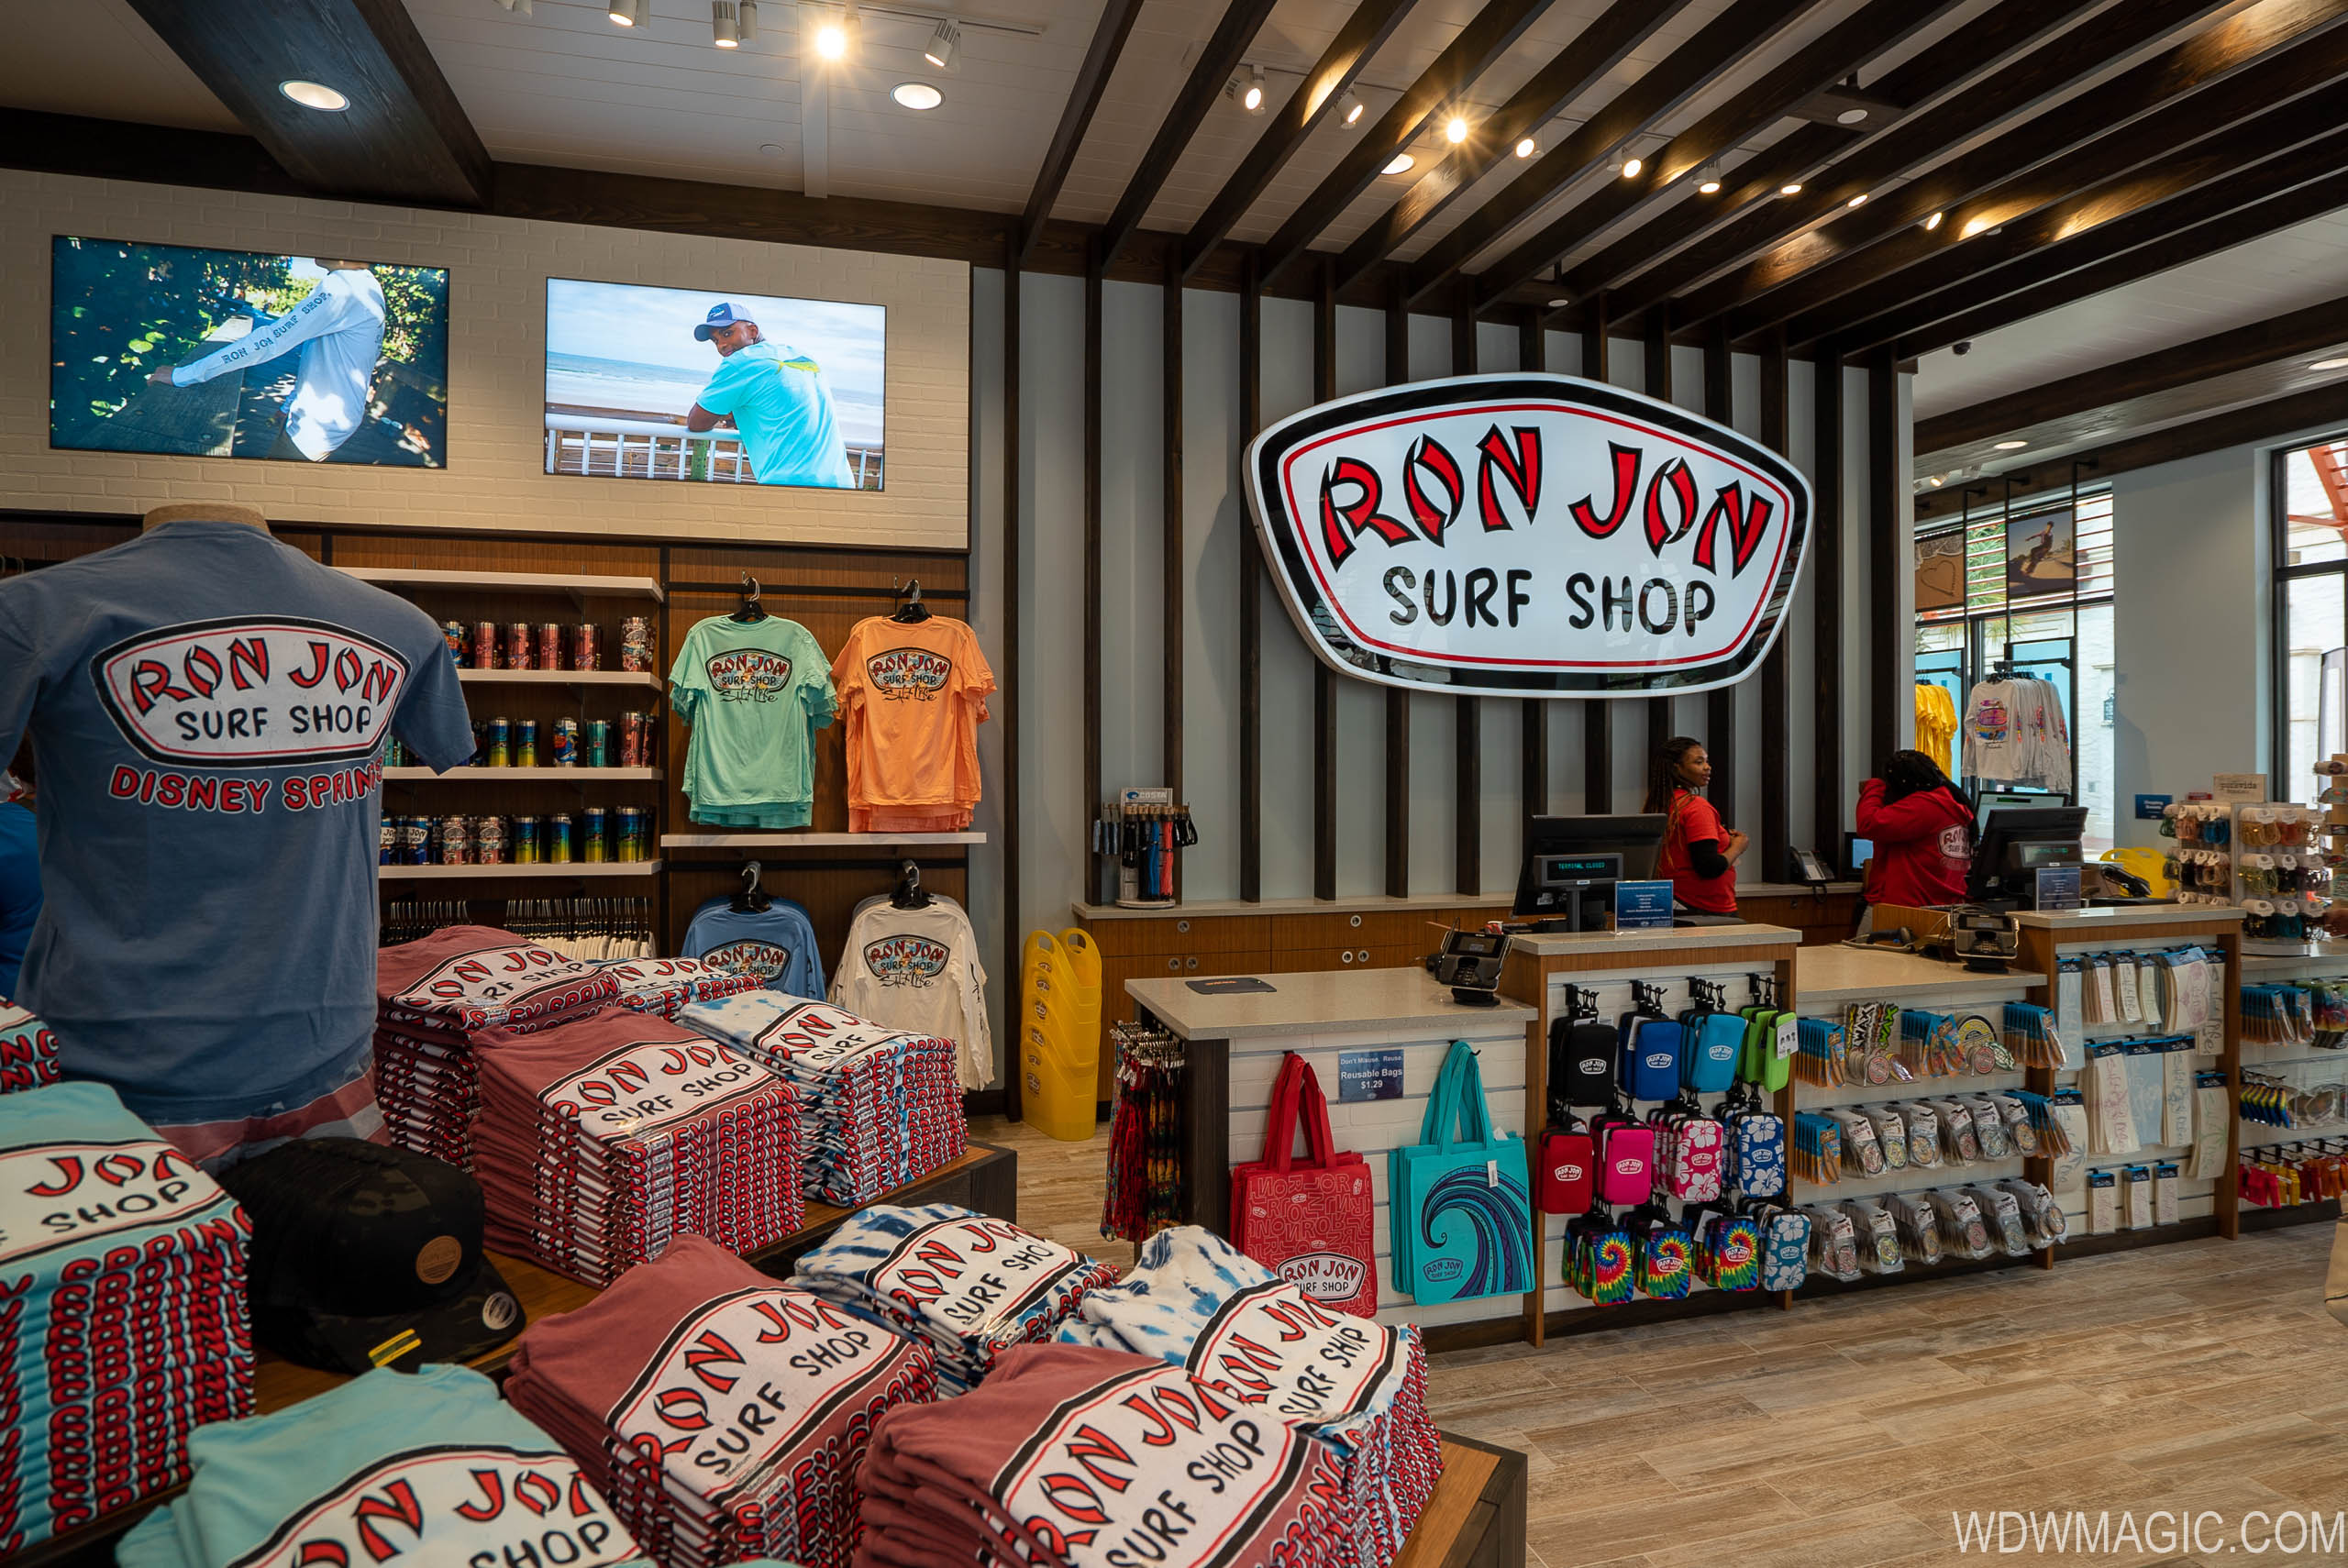 Ron Jon Surf Shop opens November 15 at Disney Springs